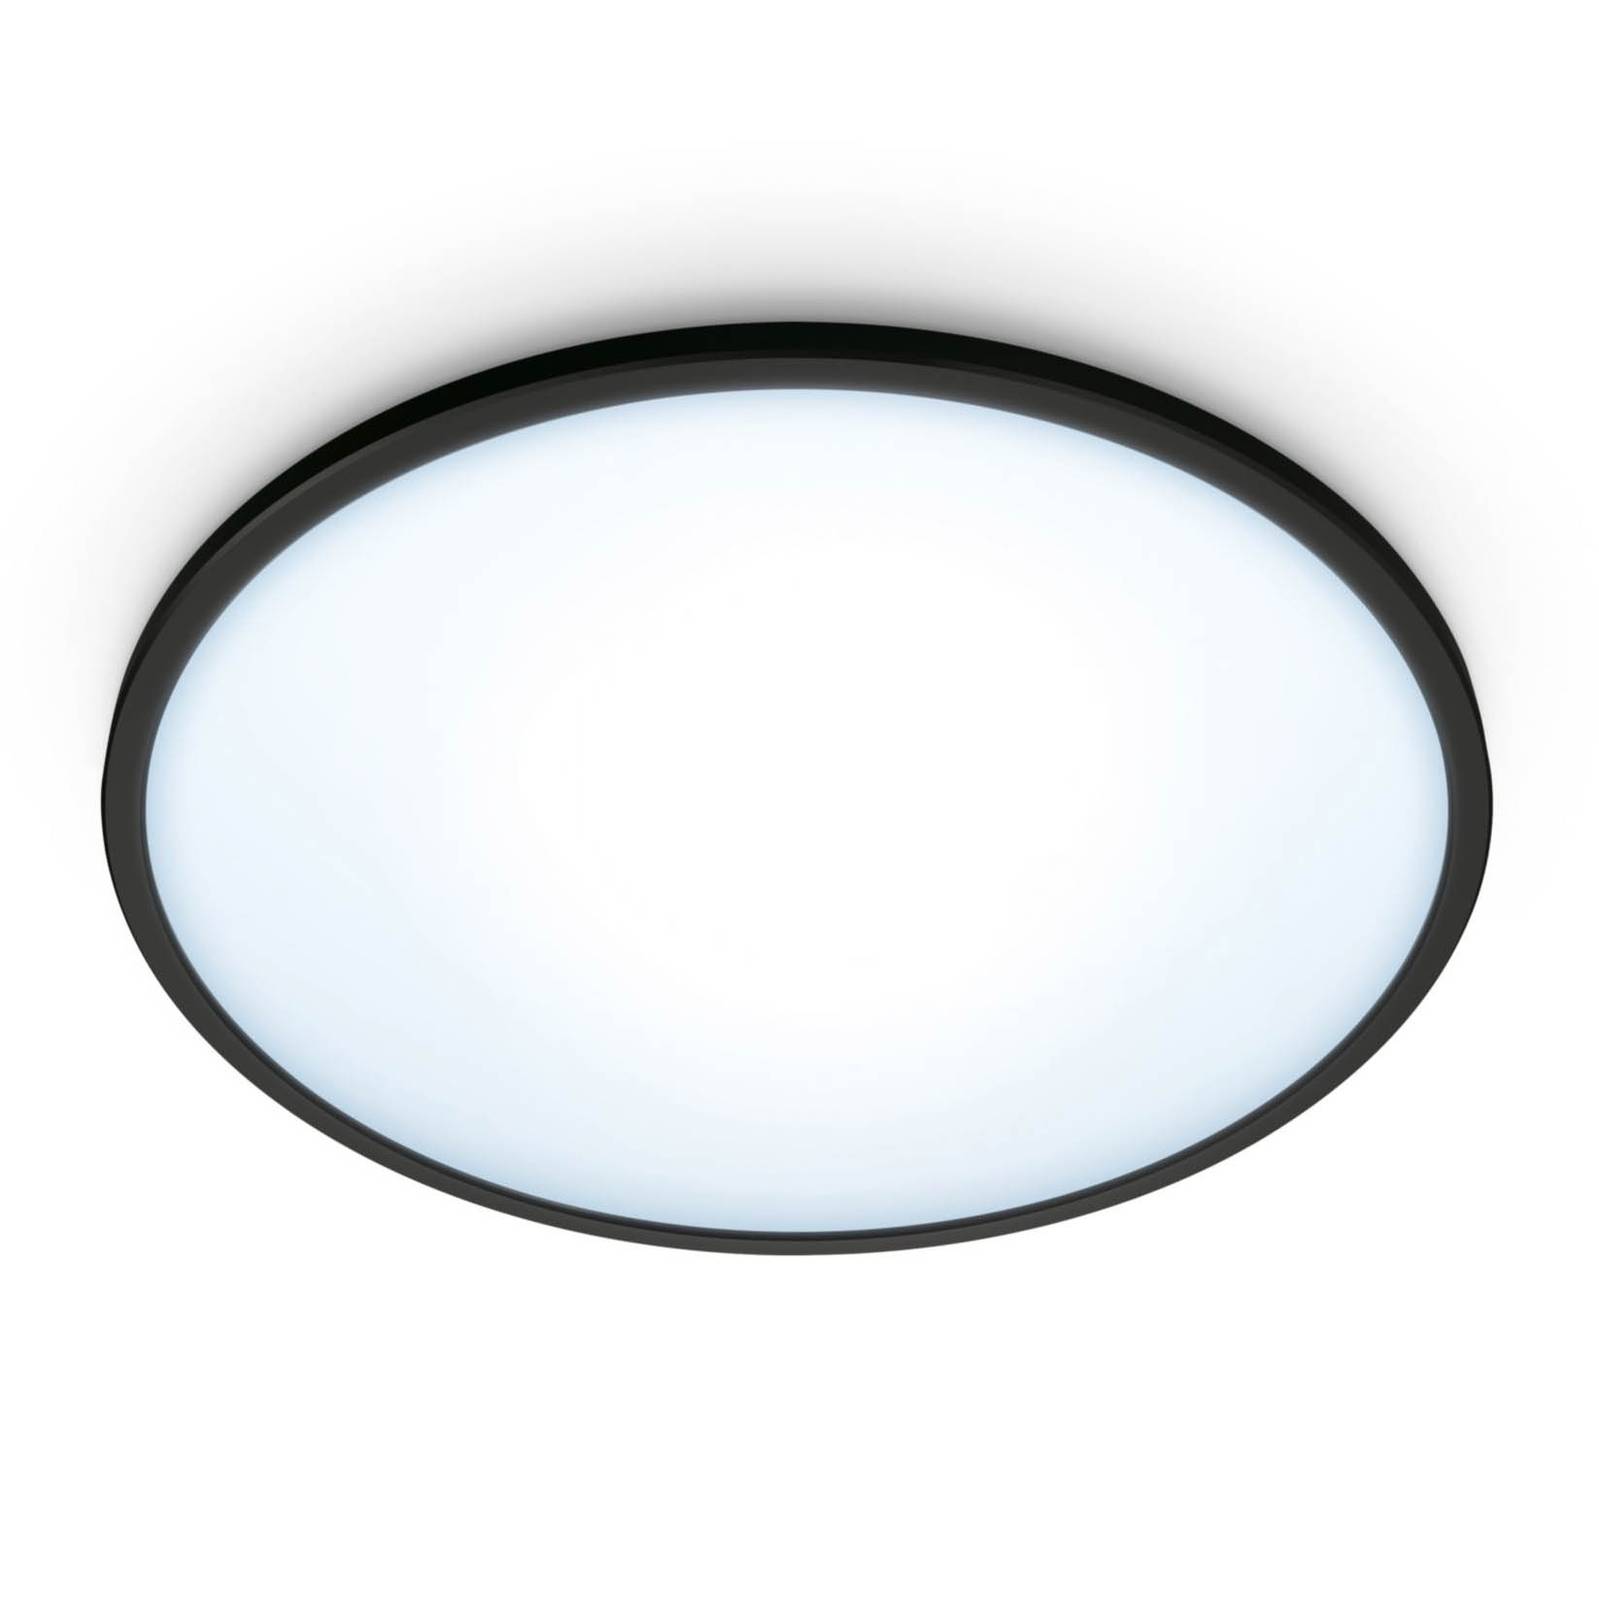 WiZ Super Slim plafonnier LED, 16W, noir